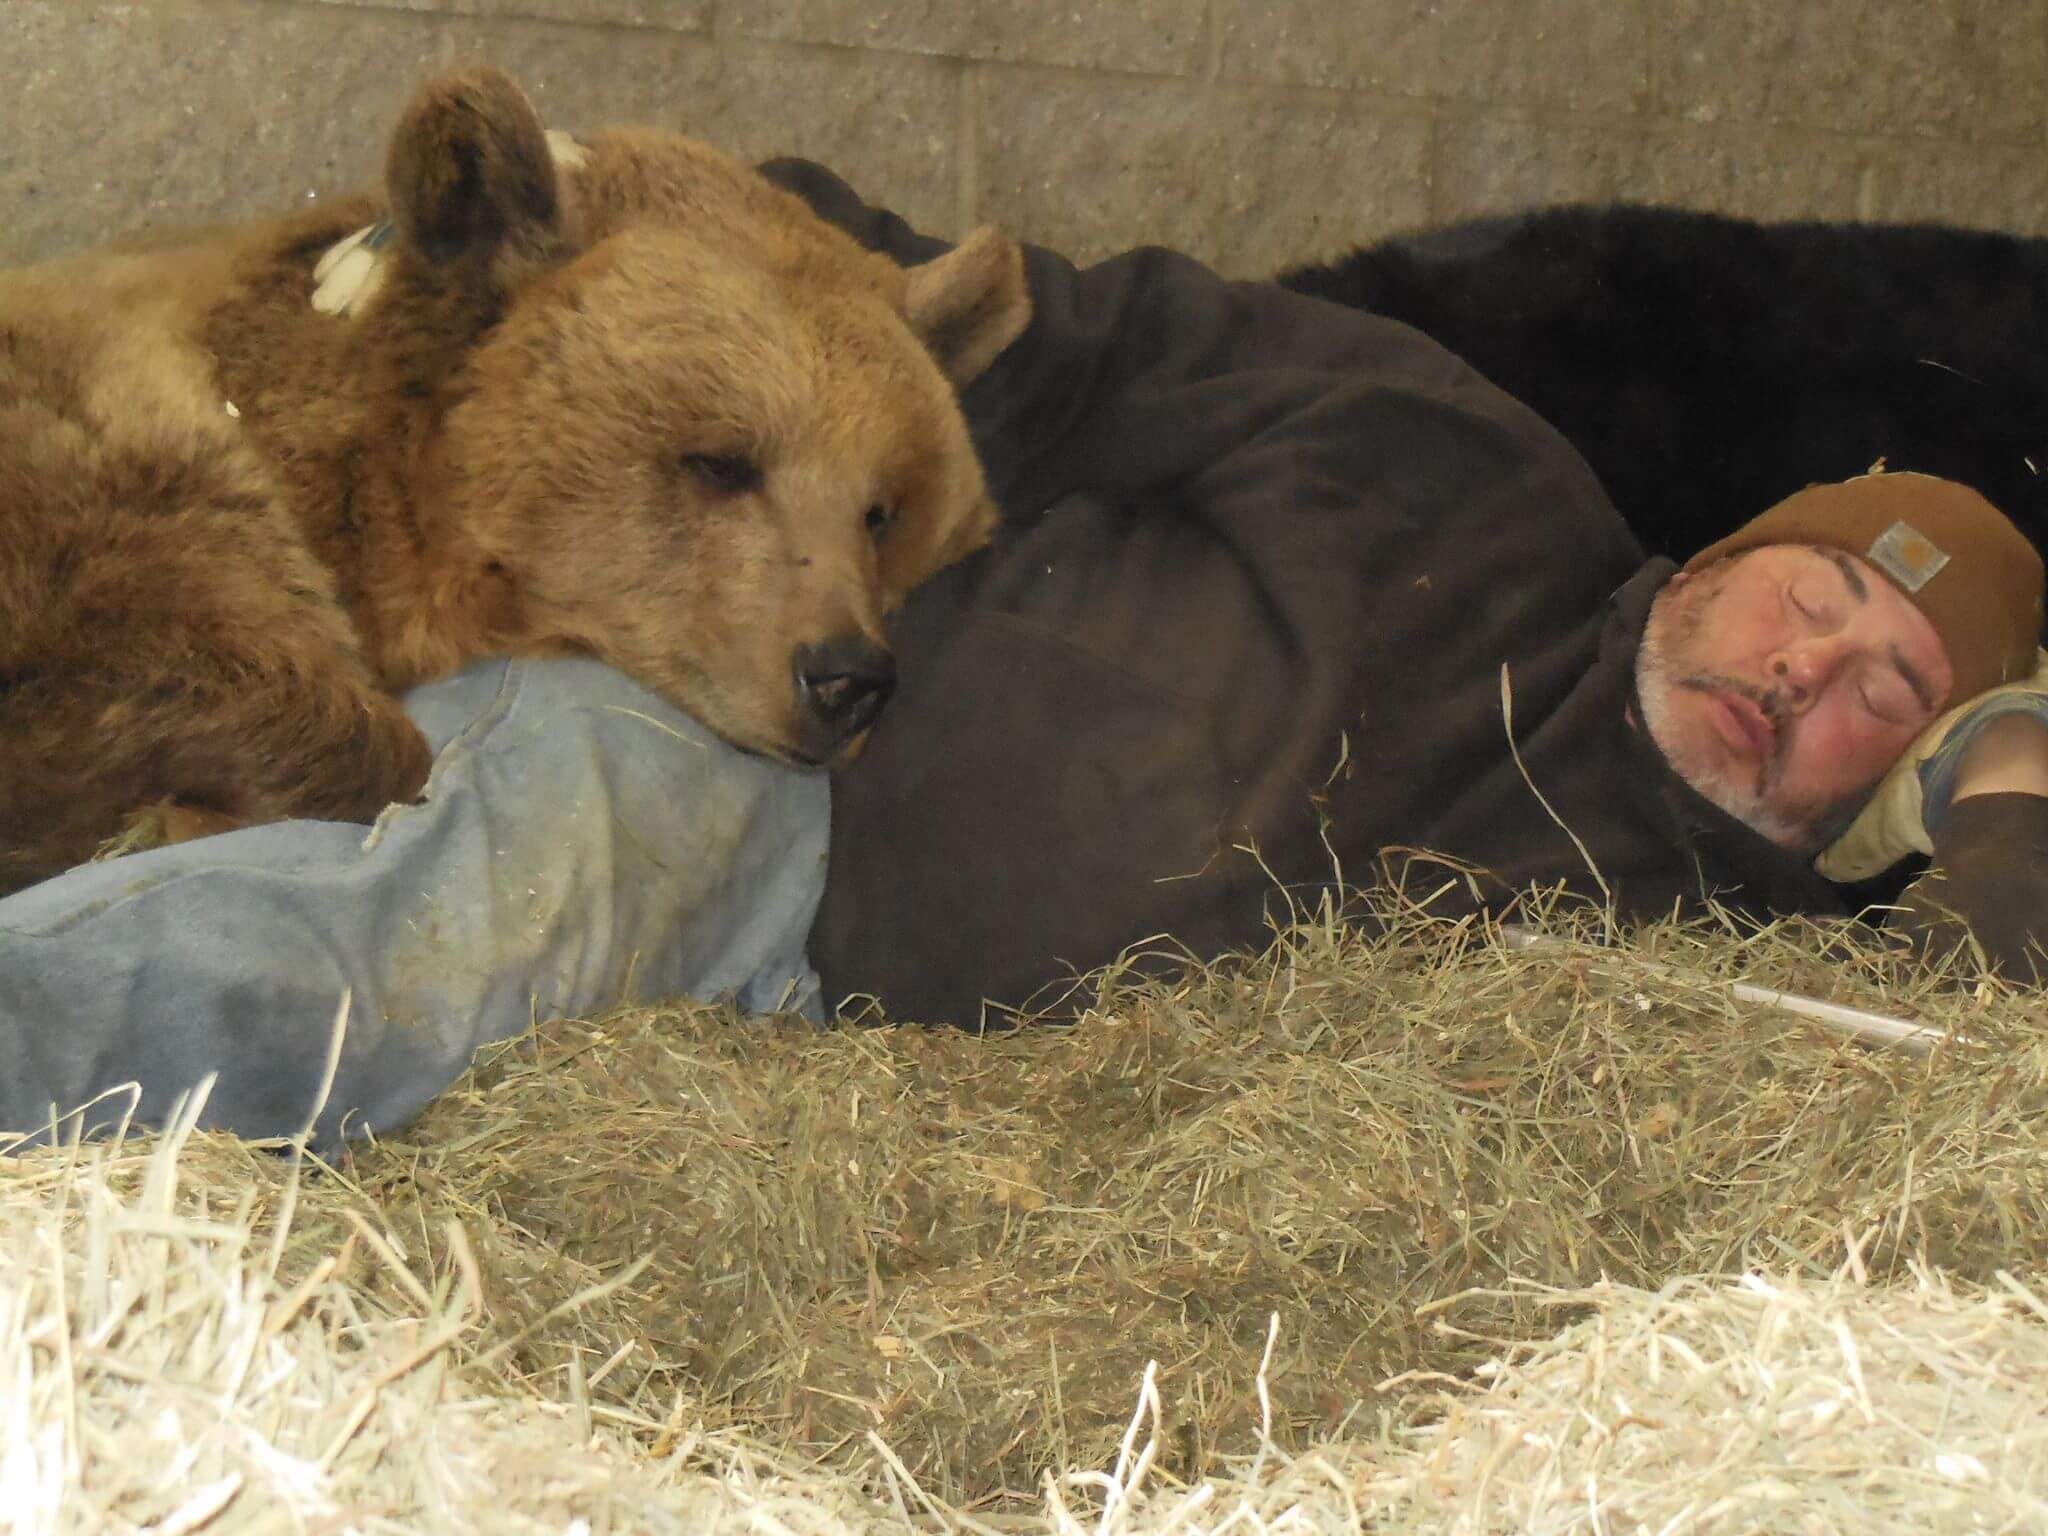 bear cuddles